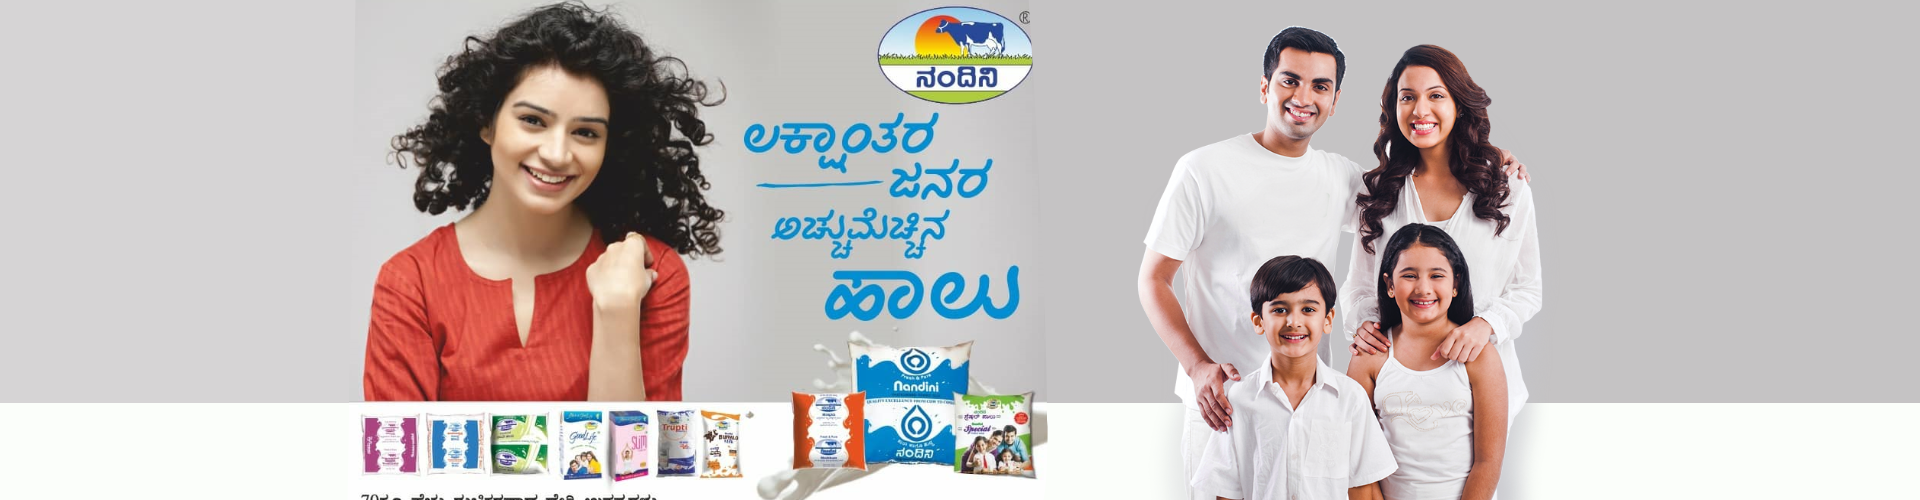 Amul vs Nandini row: Here's why the milk war in Karnataka has sparked a  social media storm - YouTube